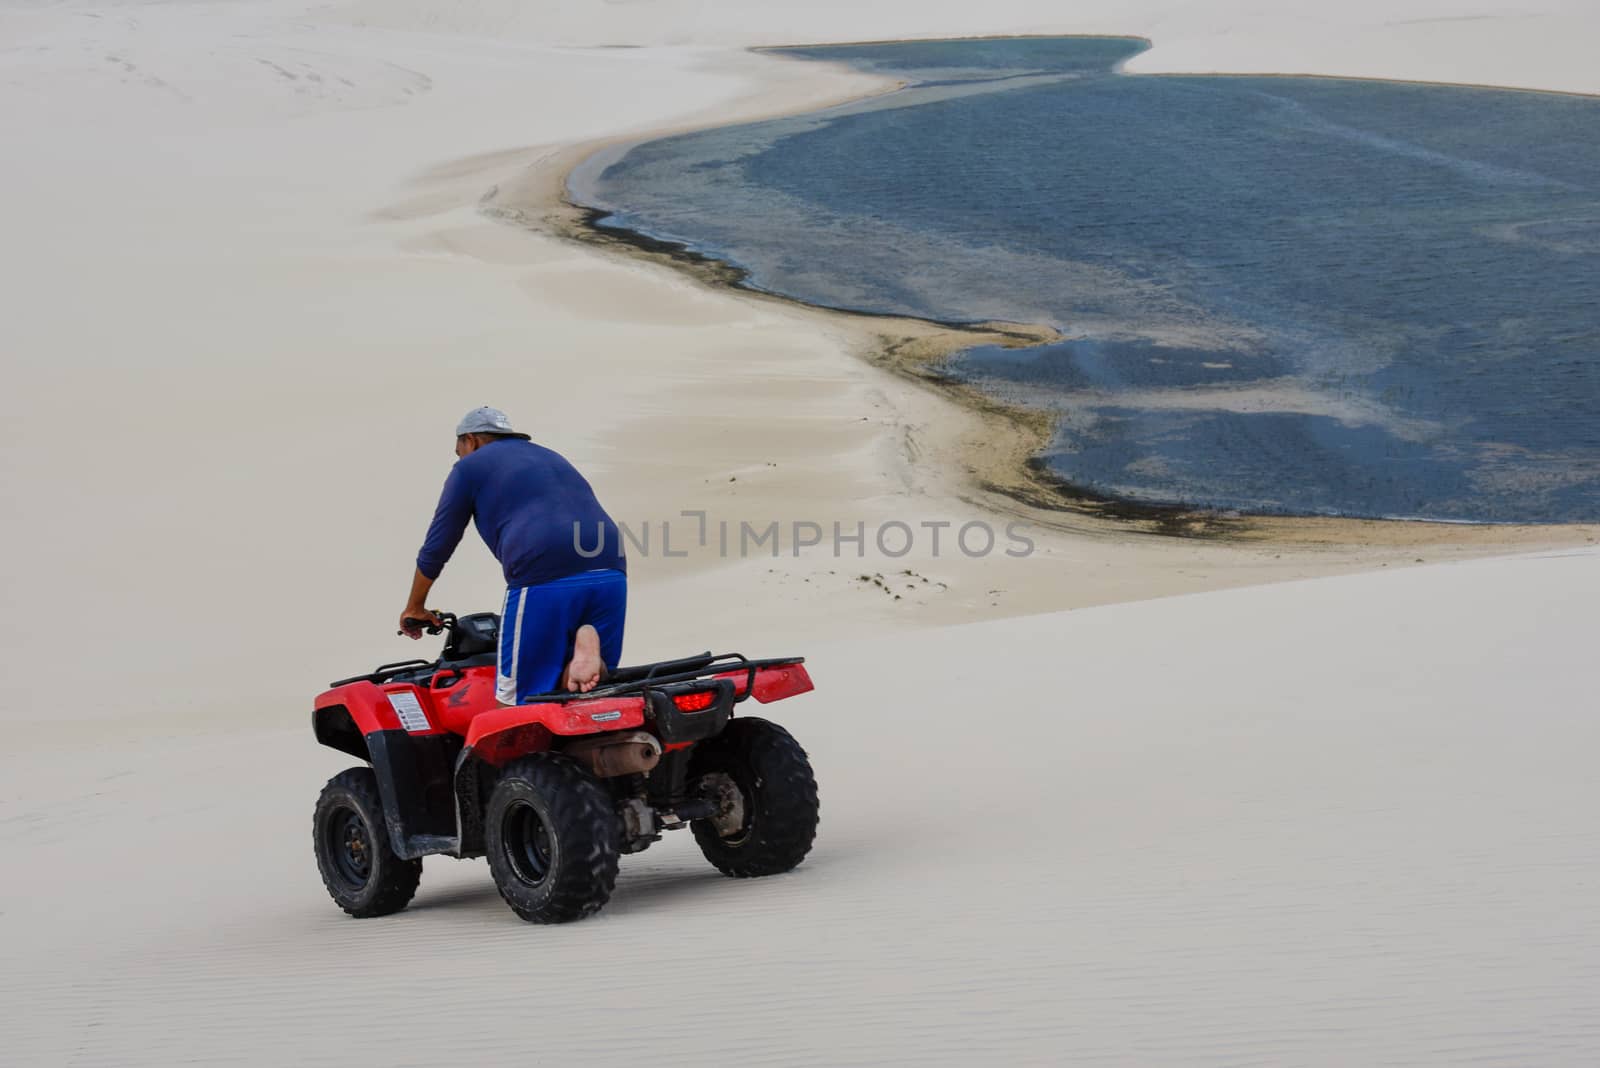 Atins, Brazil - 12 January 2019: man driving his quad on the dunes at Lencois Maranhenese National Park in Brazil